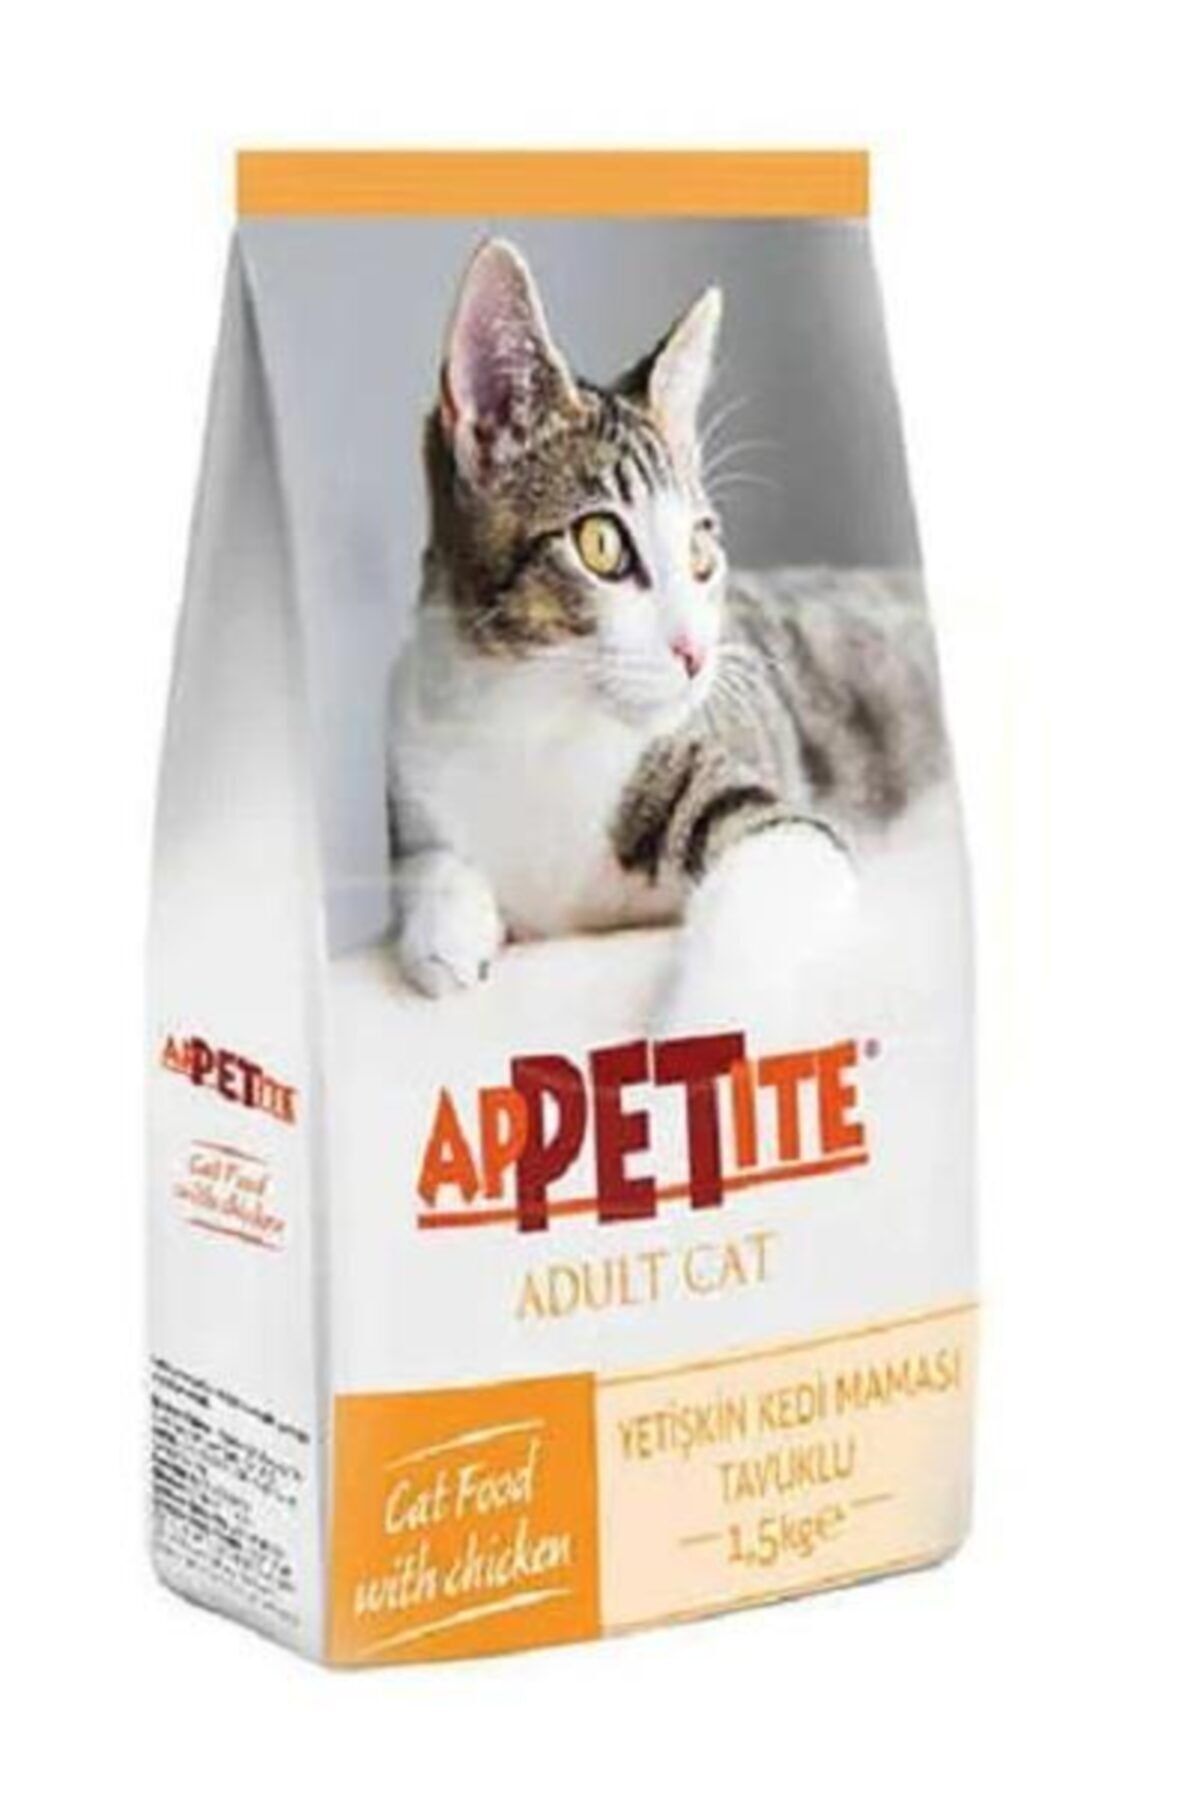 Appetite Tavuklu Yetişkin Kuru Kedi Maması 1,5 Kg